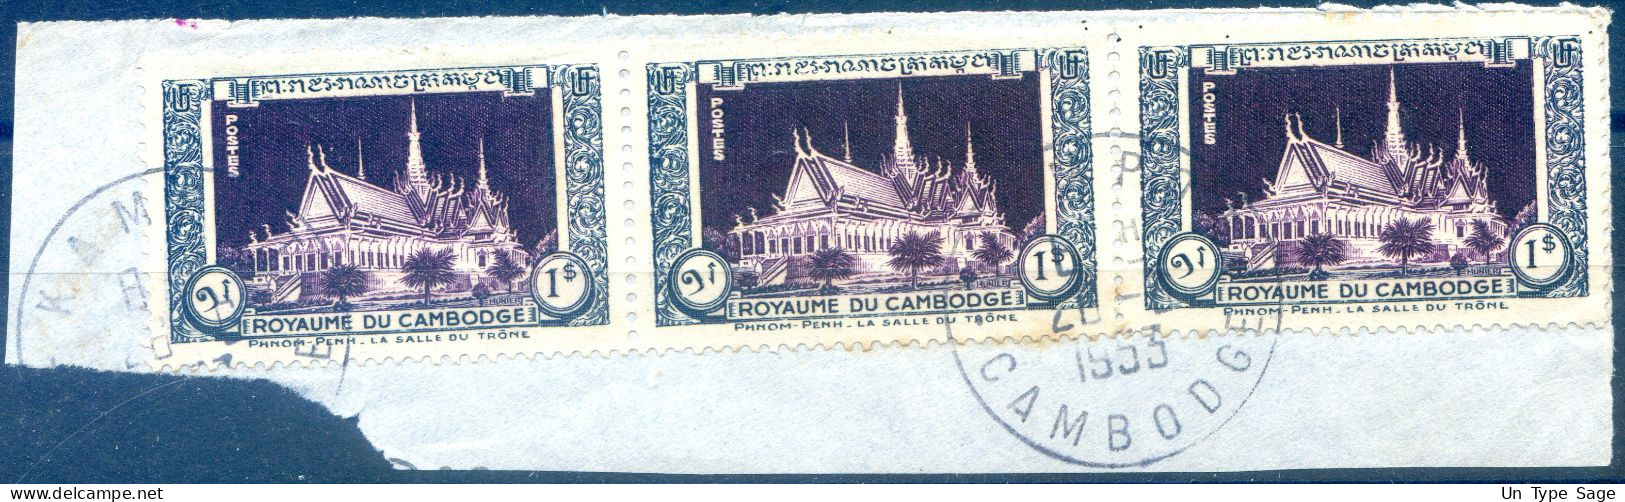 Cambodge, TAD PHNOM PENH 1953 - (F359) - Kambodscha